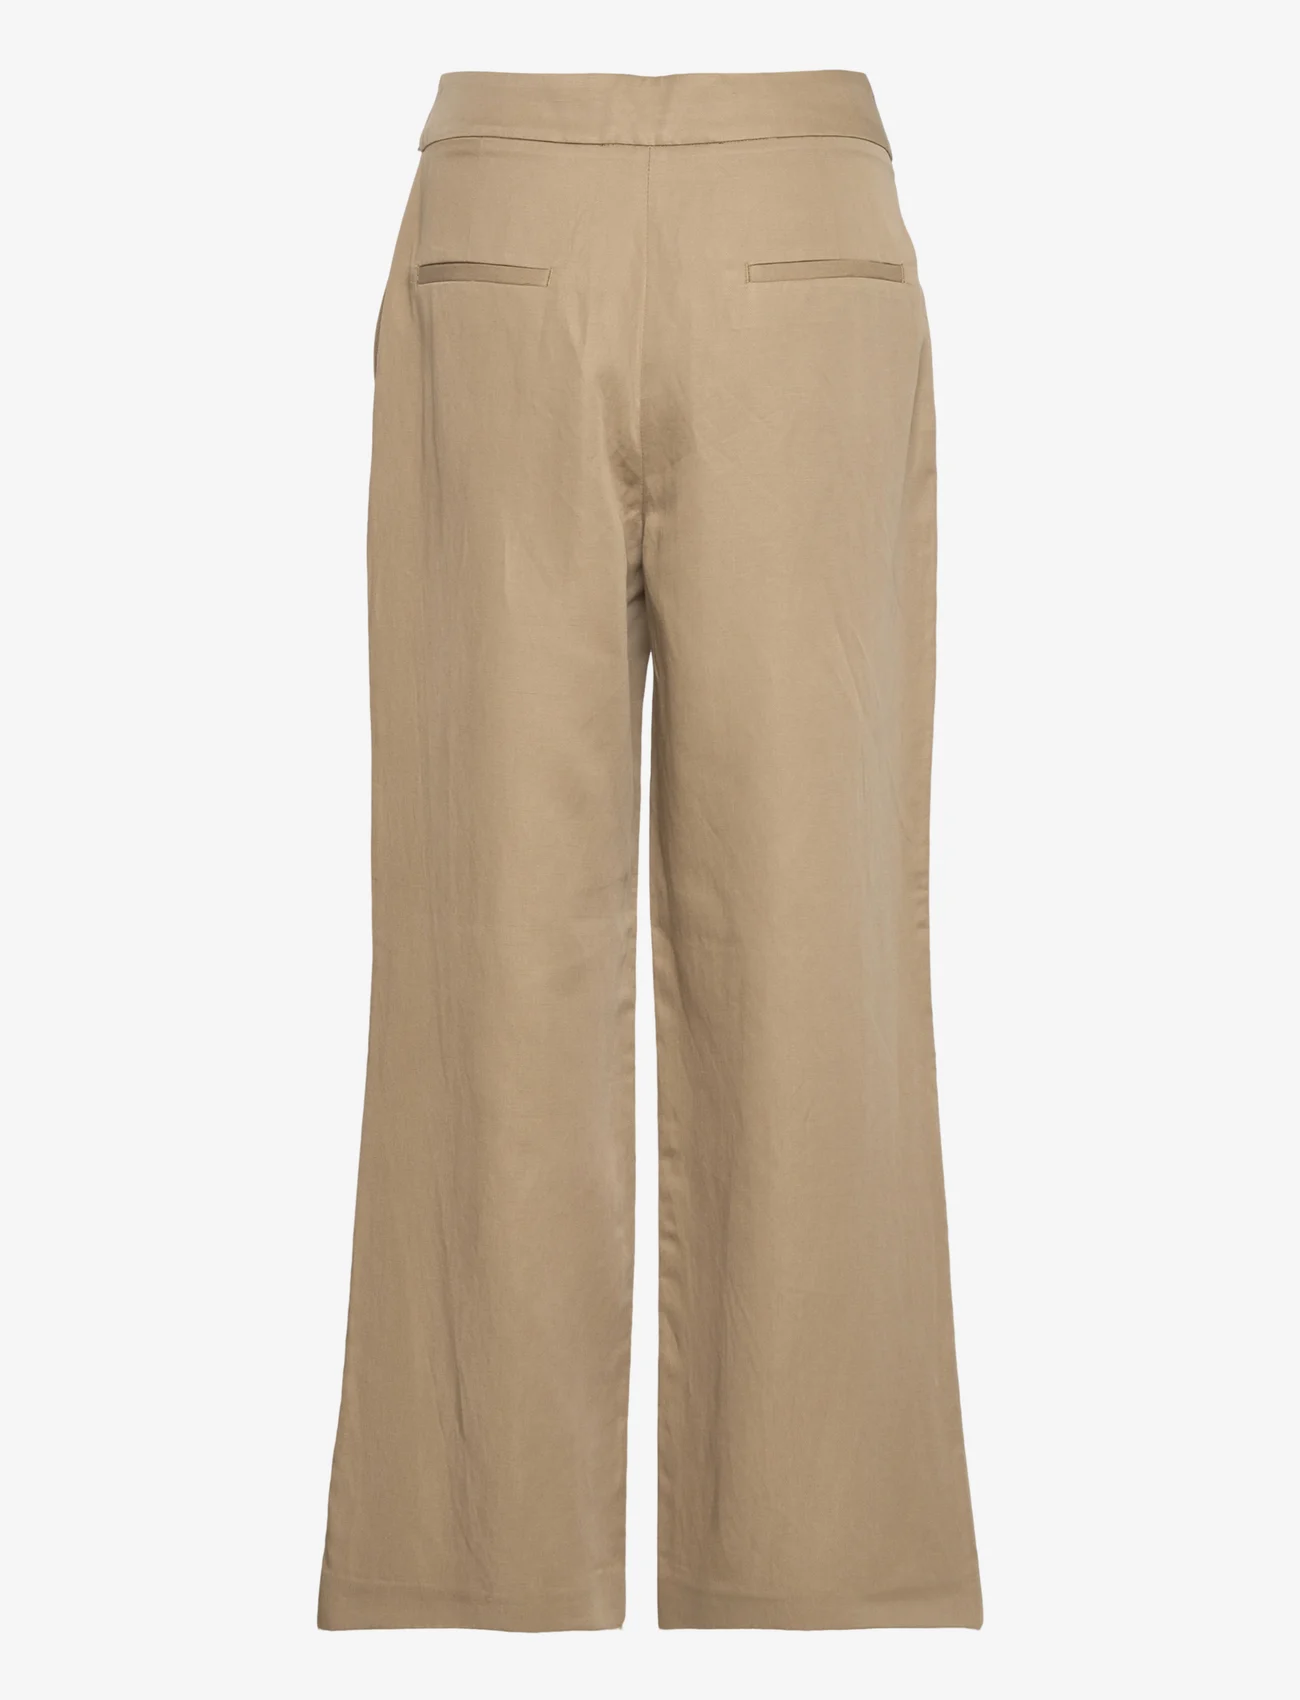 Esprit Collection - Women Pants woven length service - wide leg trousers - khaki green - 1